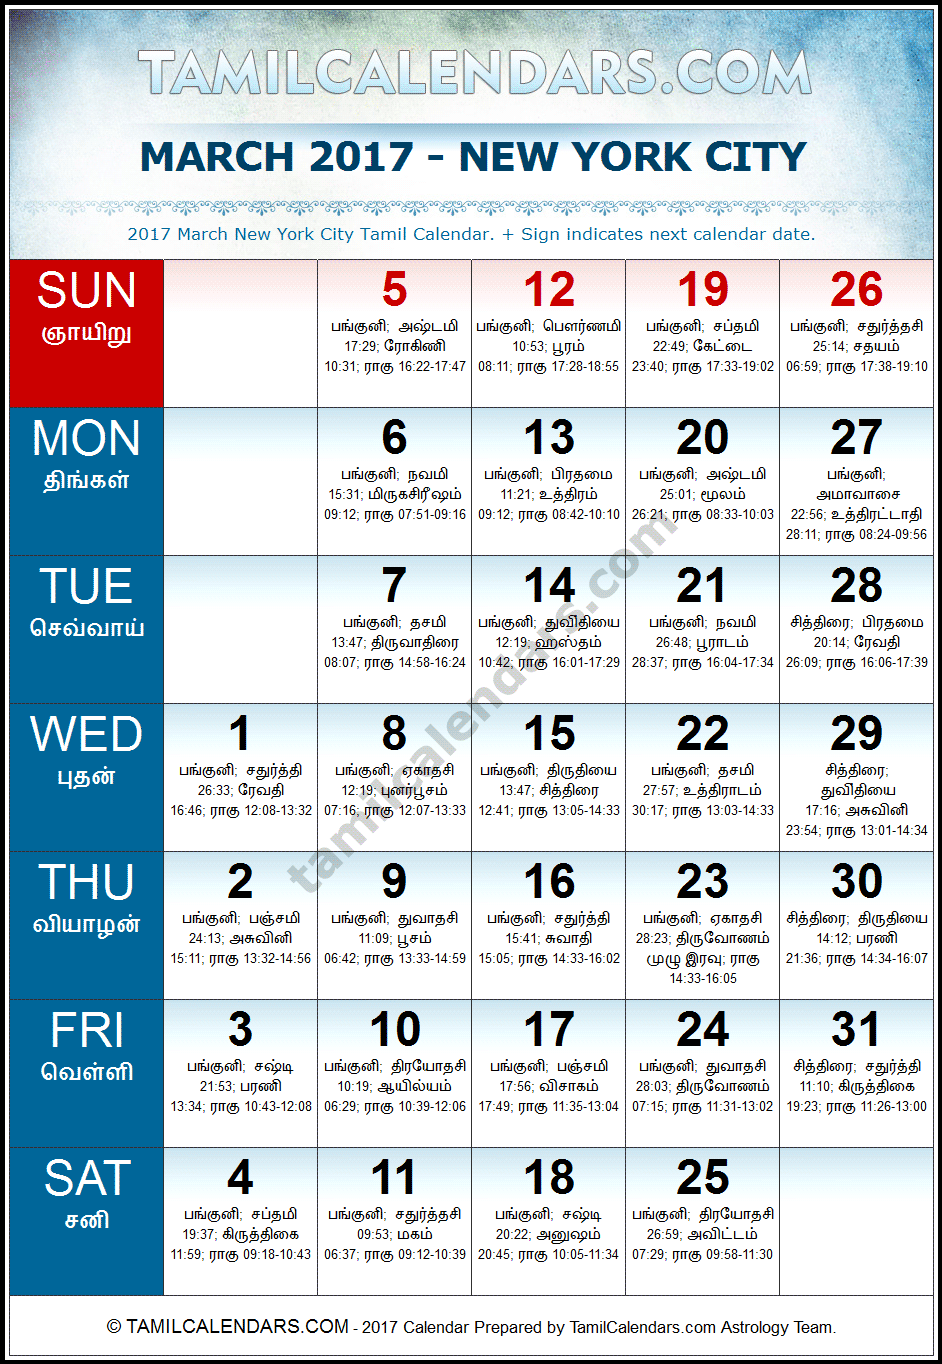 March 2017 Tamil Calendar for New York, USA